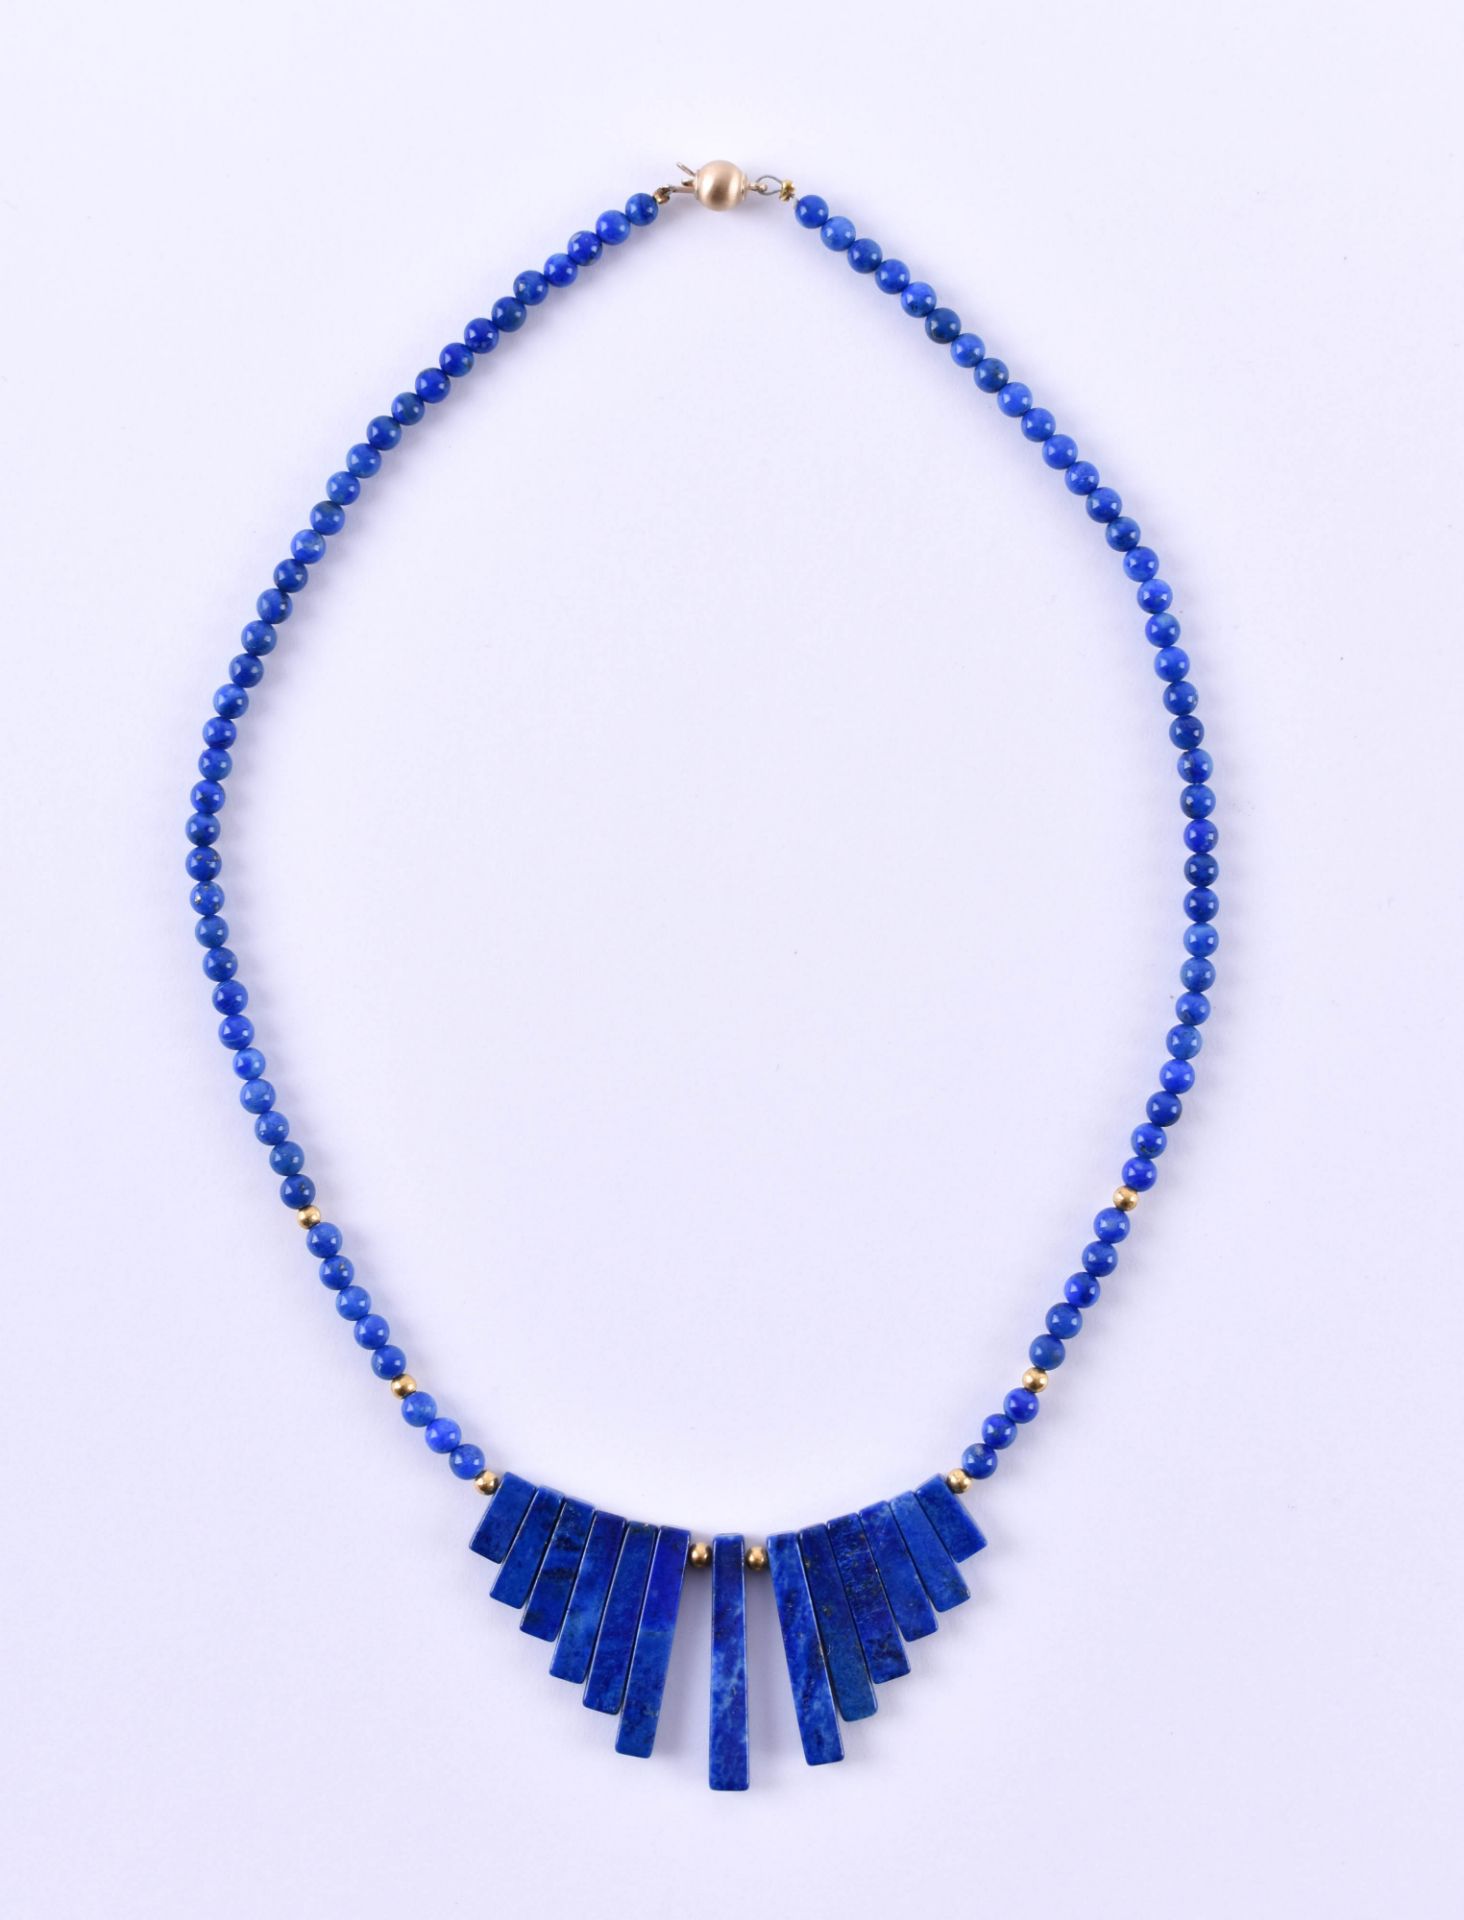 Lapis lazuli necklacewith 585 yellow gold applicationsand clasp, very nice lapis lazuli necklace